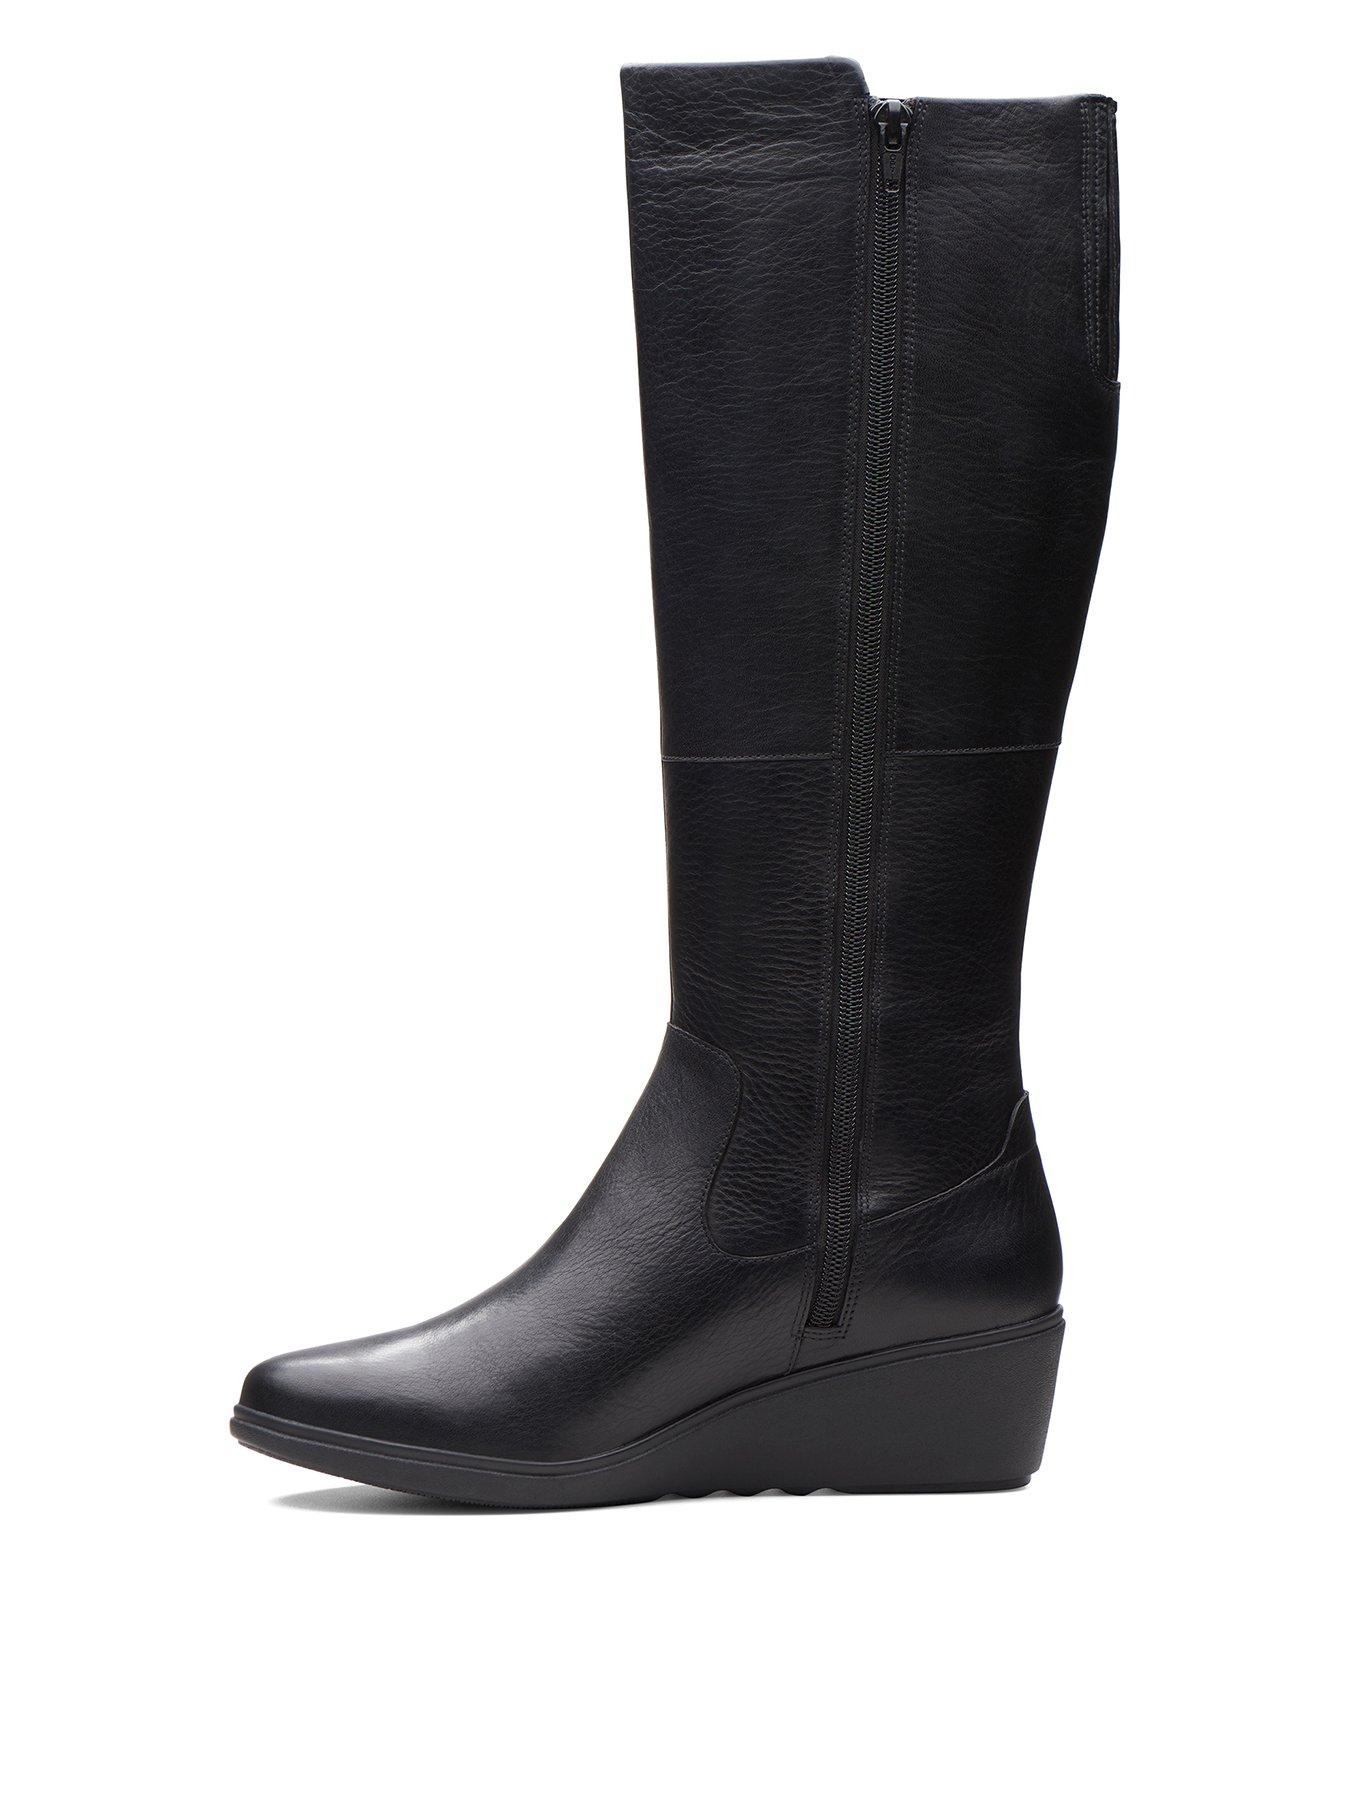 black wedge knee high boots uk